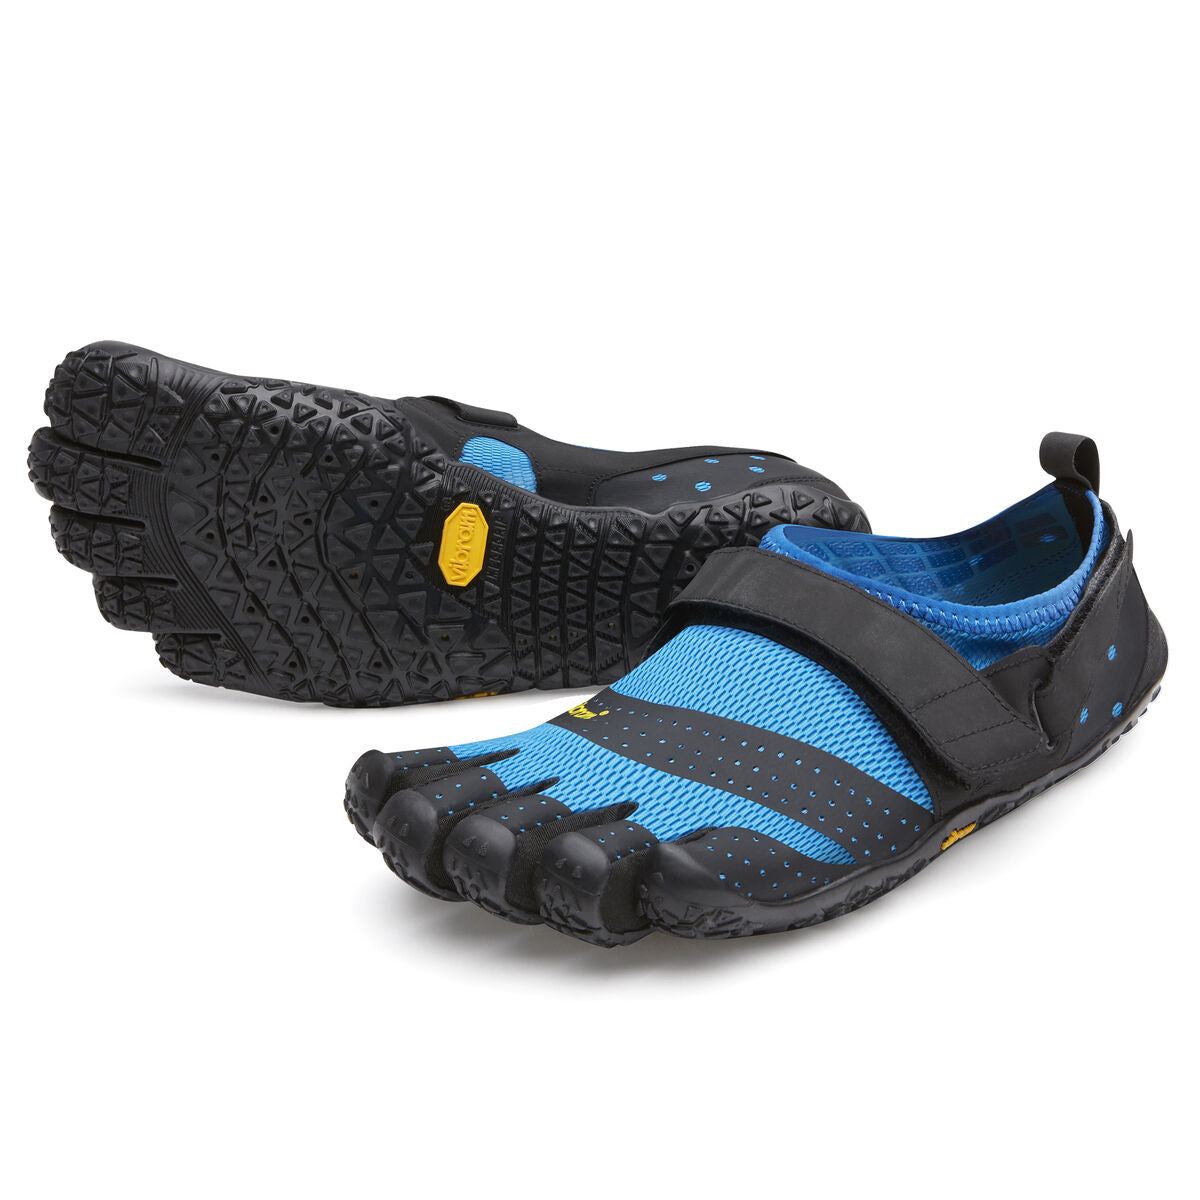 Men's Vibram Five Fingers V-Aqua Water Shoe in Blue/Black from the front